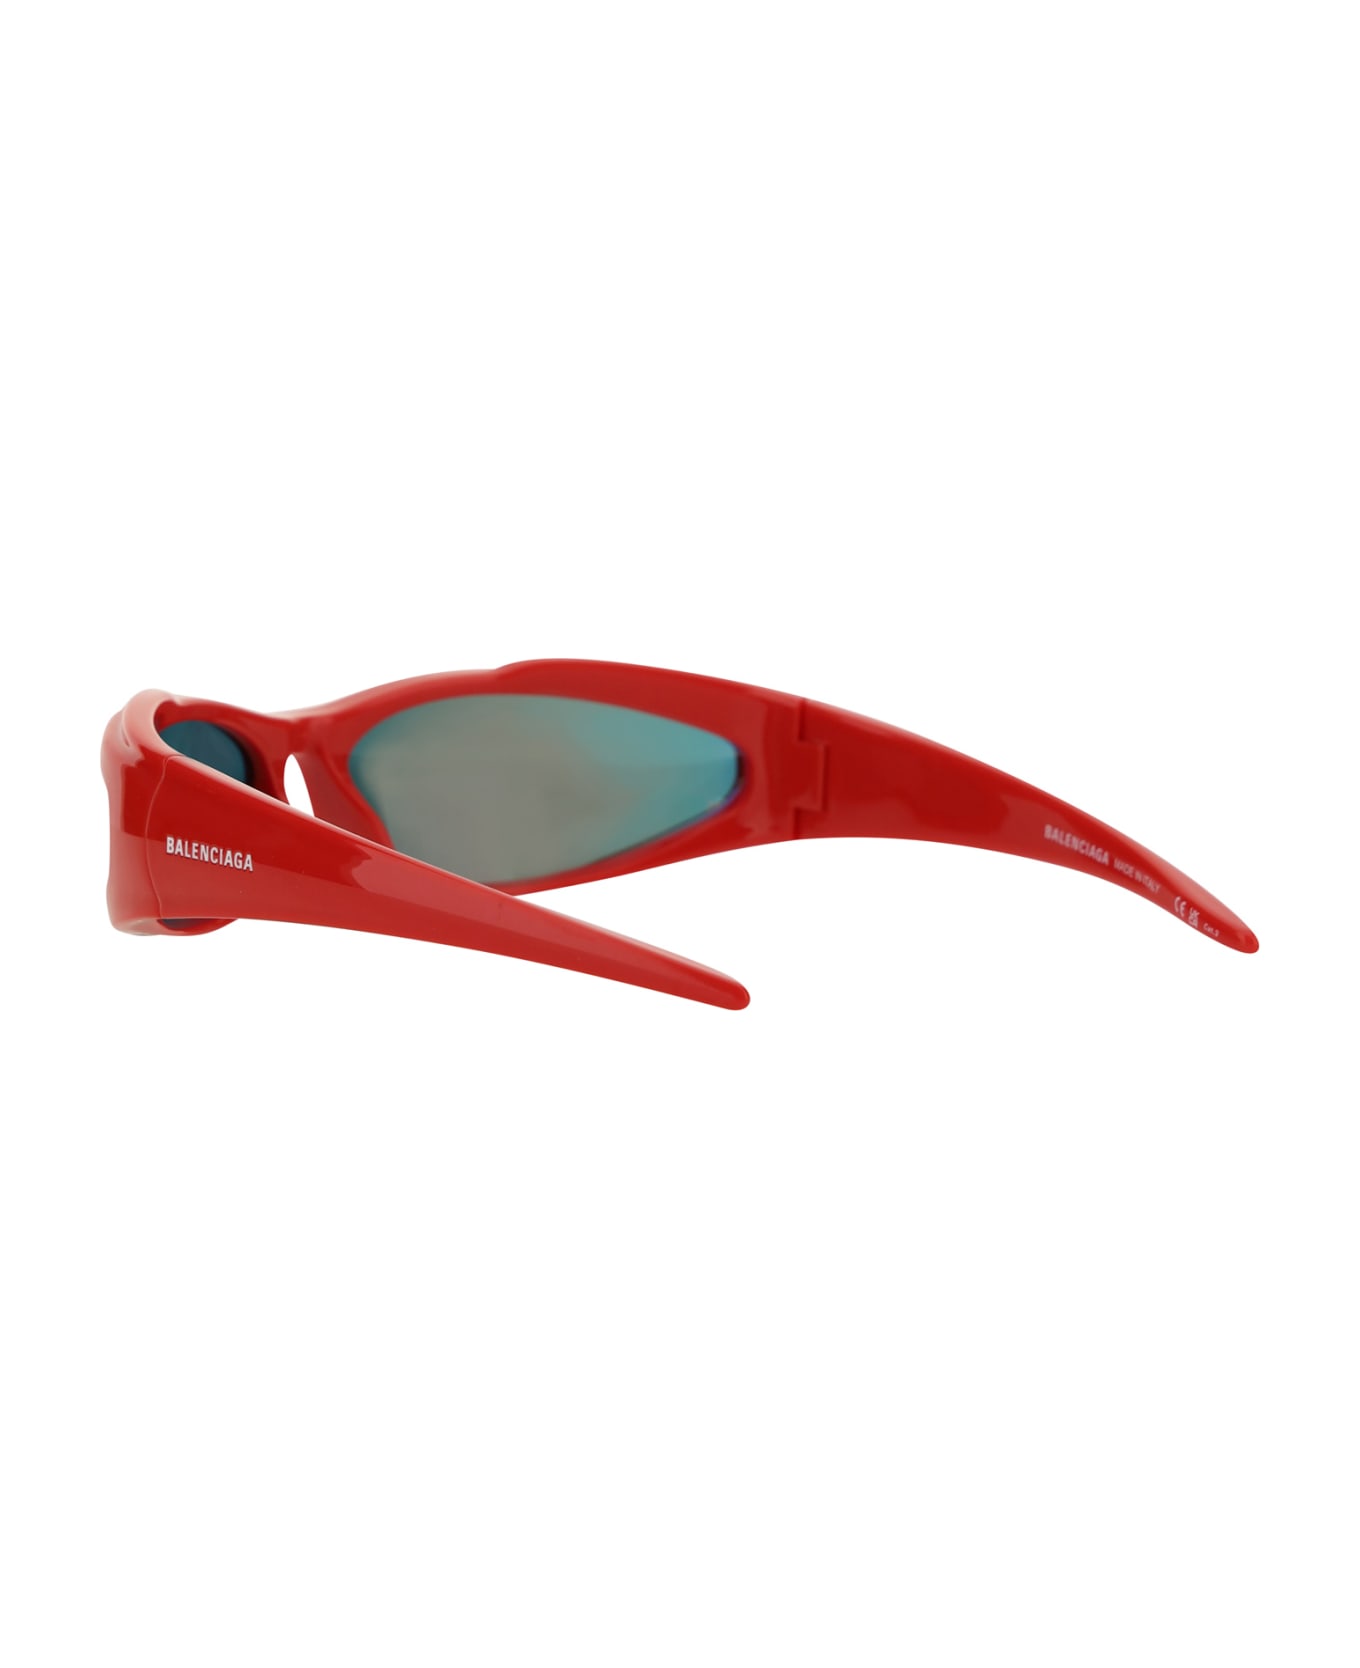 Balenciaga Eyewear Rex Xpand Sunglasses - Red/mirror Red